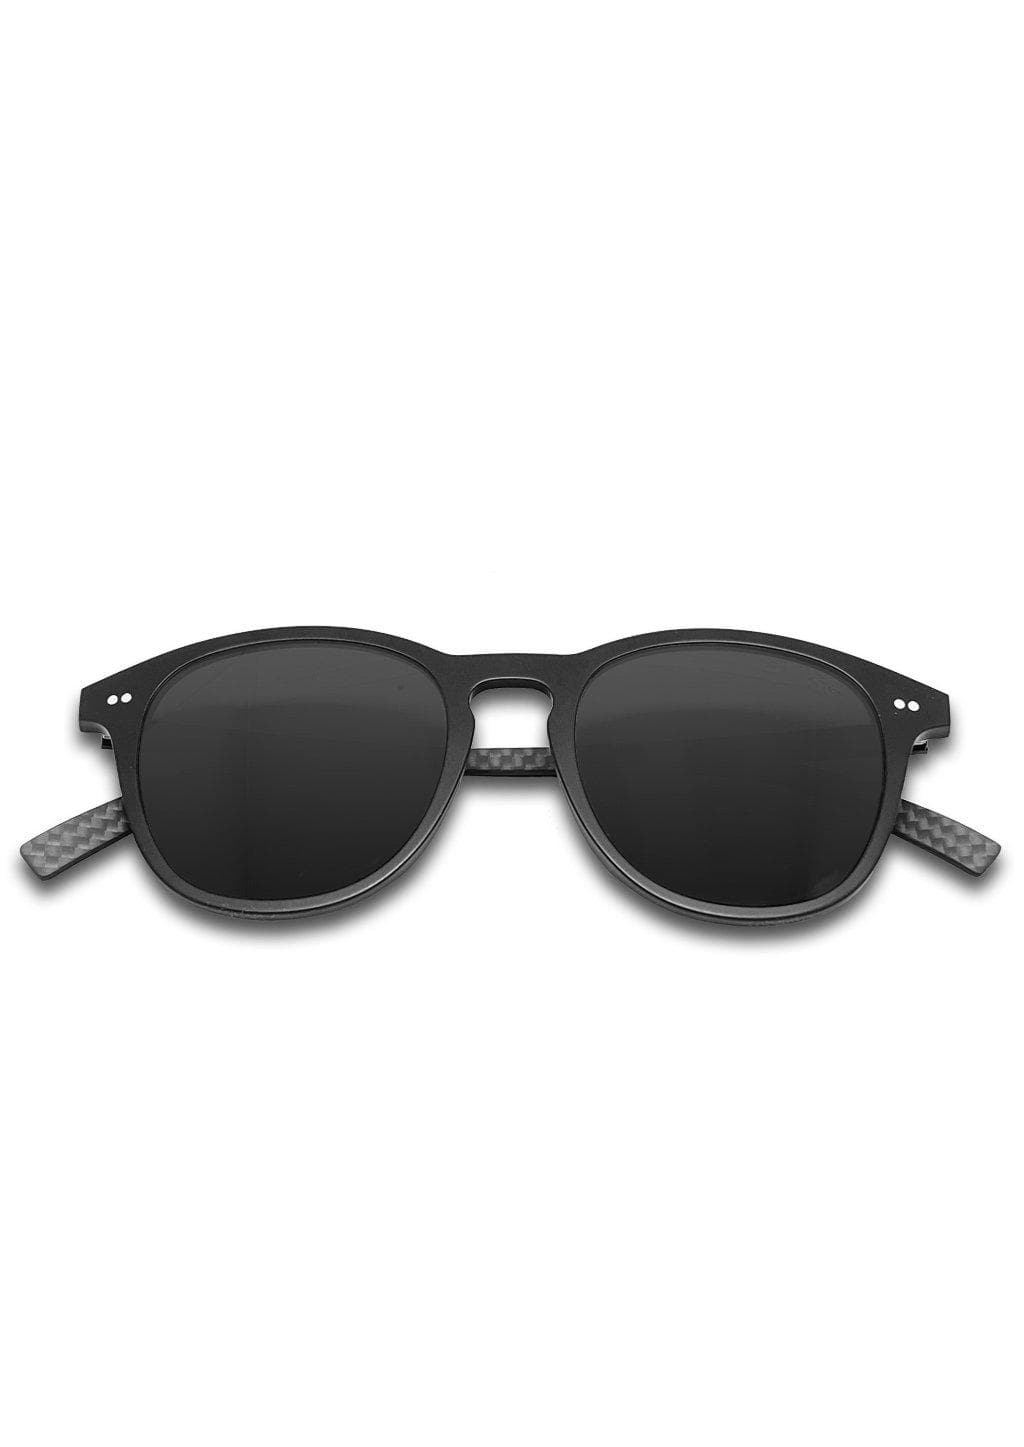 Hybrid - Halo, carbon fiber and acetate sunglasses of the highest quality. Black frame with black lenses.